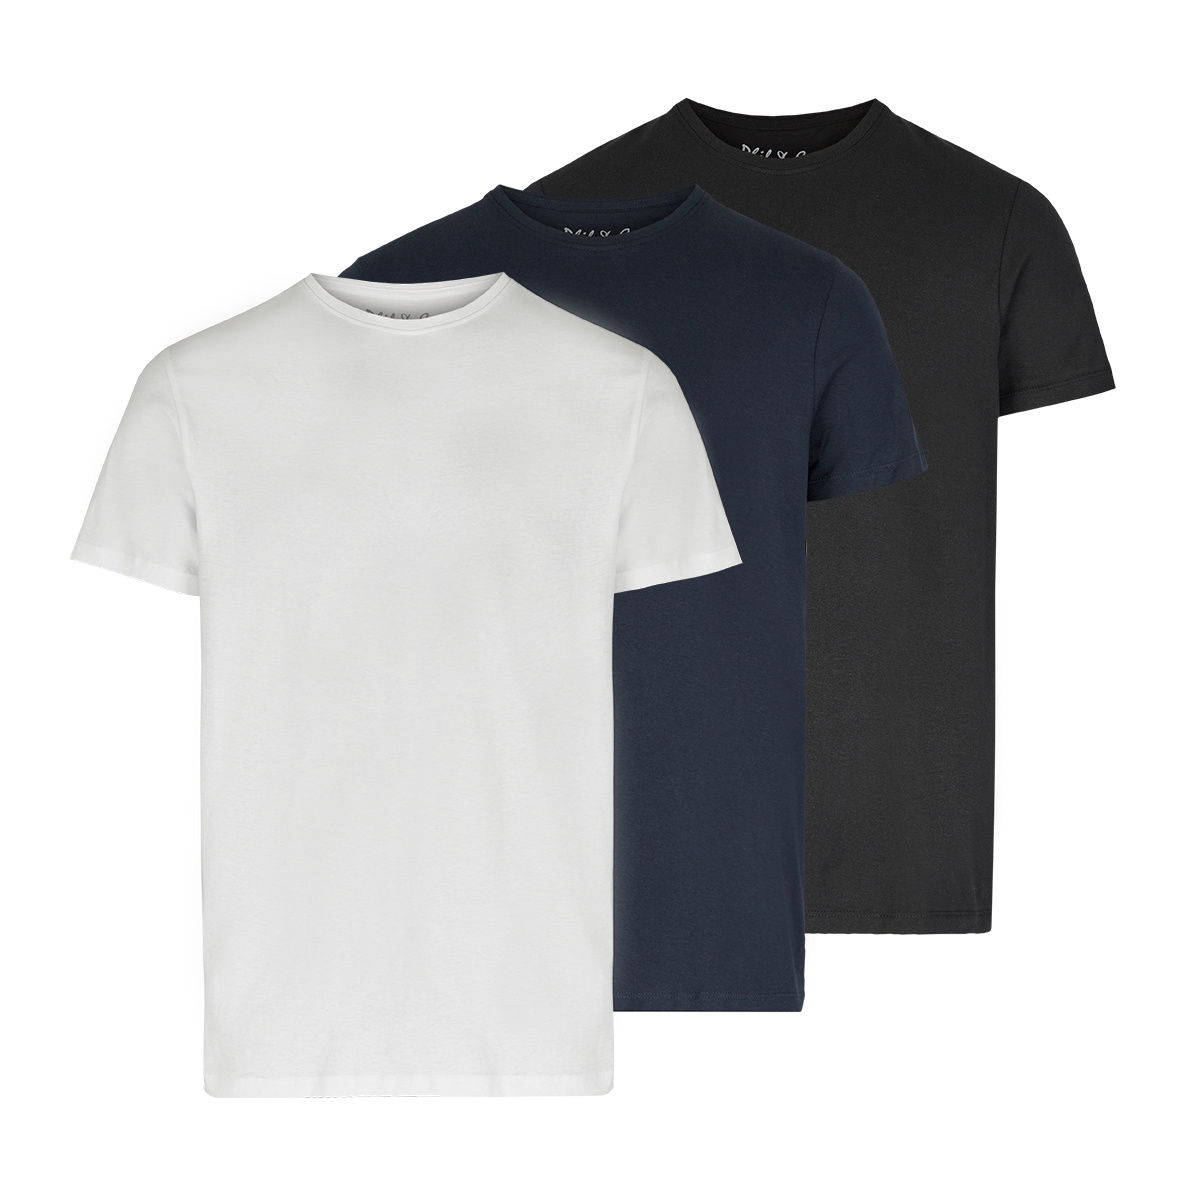 uitbarsting Onhandig Vul in Phil & Co Ondershirt Heren T-shirt Ronde Hals 3-Pack Zwart Blauw Wit |  Underwear District